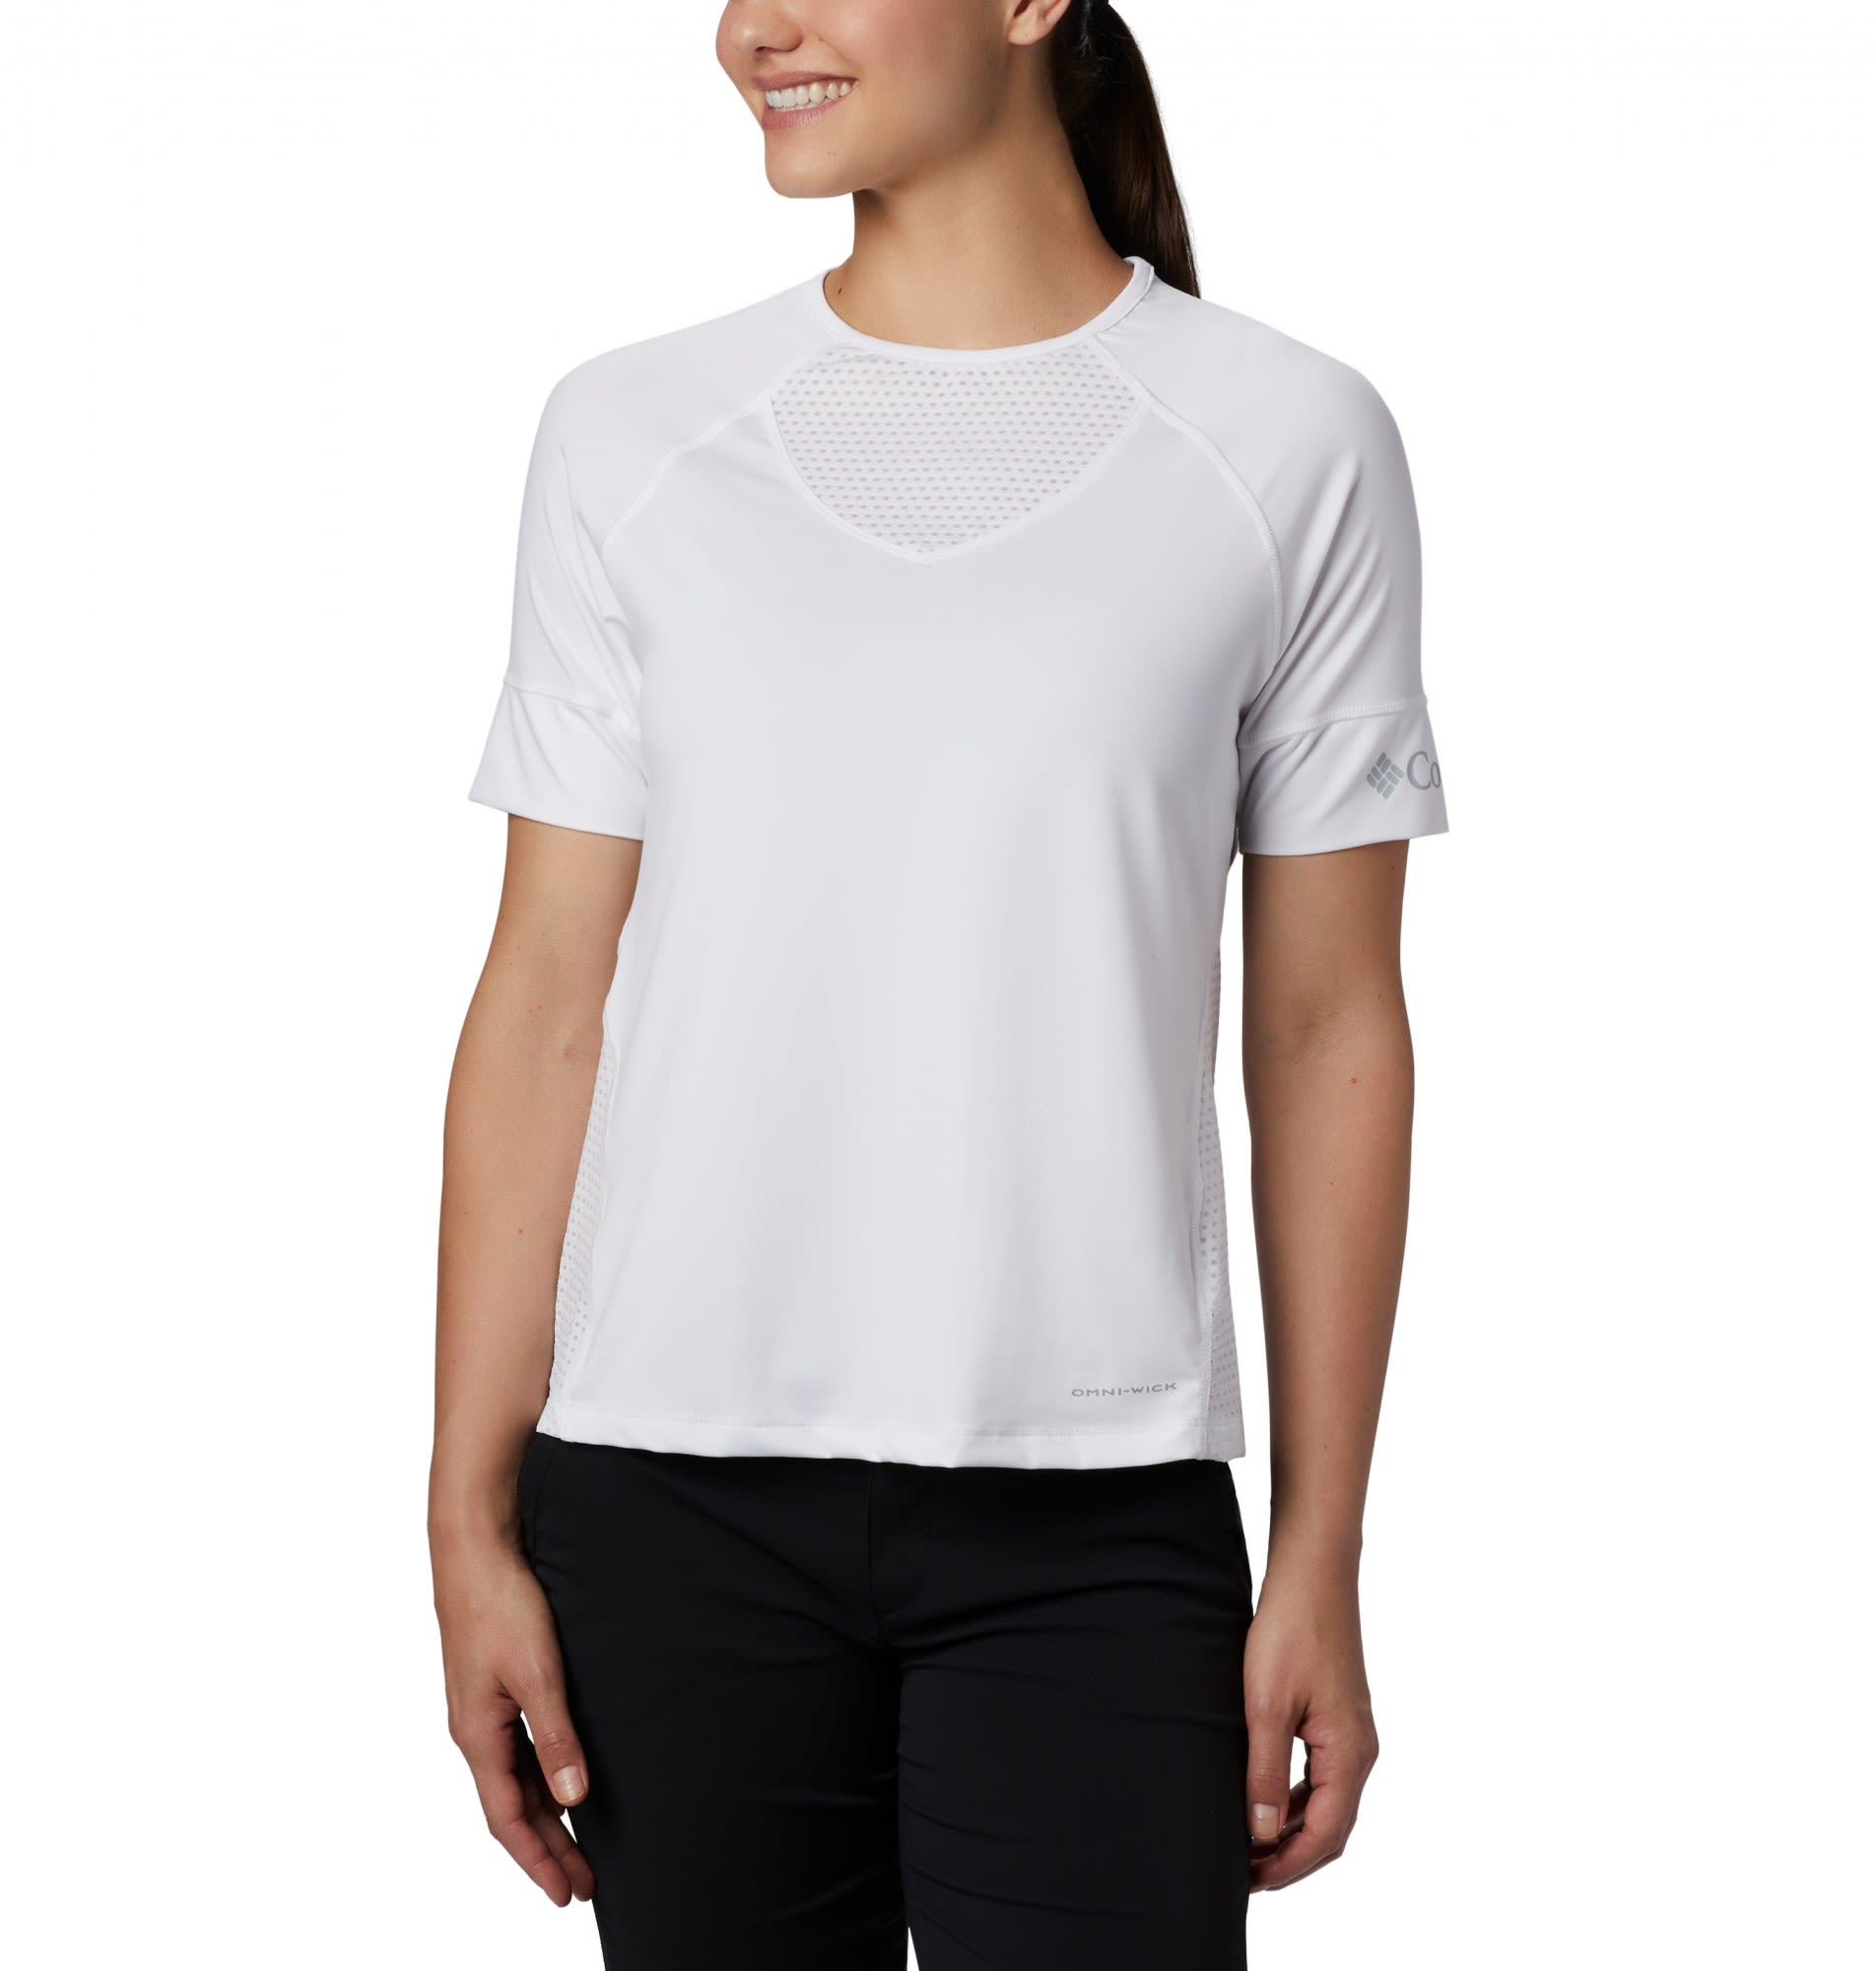 Columbia Windgates Short Sleeve Tee Weiss- Female Kurzarm-Shirts- Grsse L - Farbe White unter Columbia